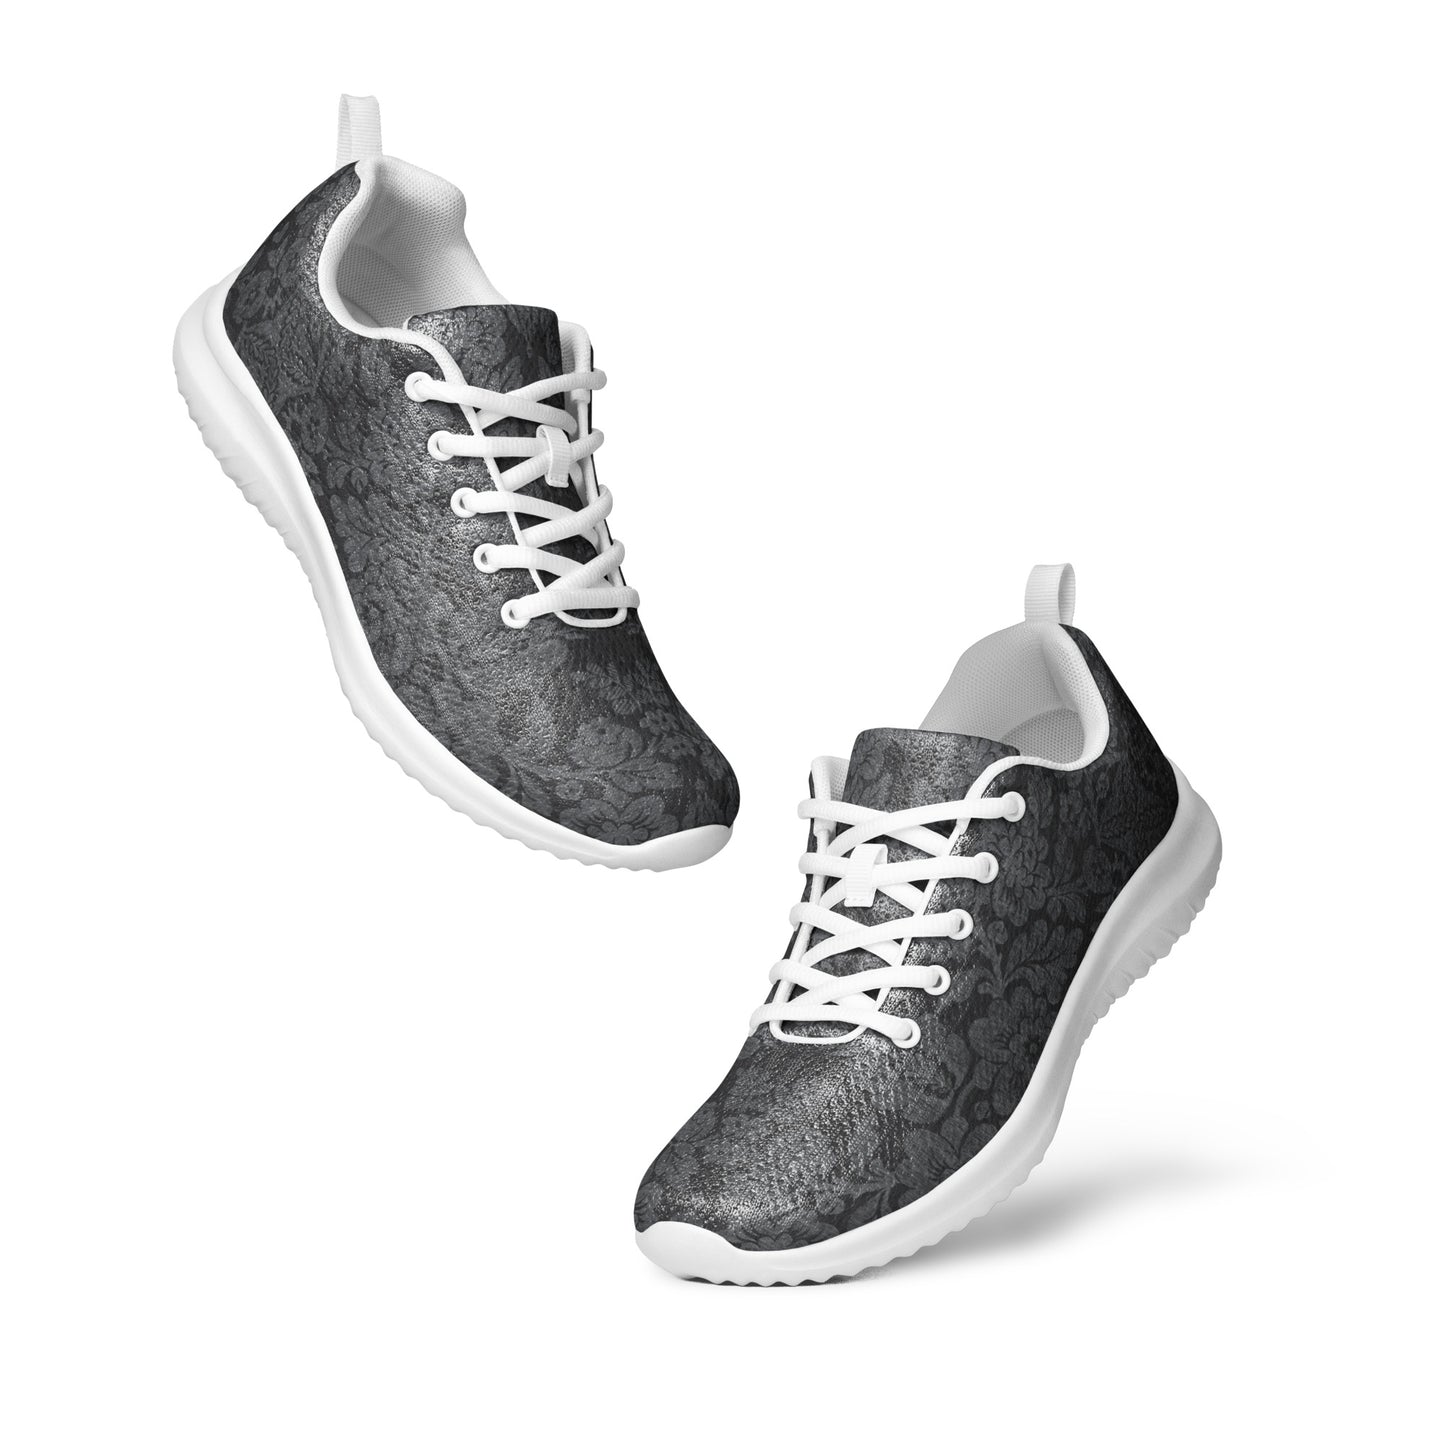 DASH Black Velvet Roses Men’s Athletic Shoes Lightweight Breathable Design by IOBI Original Apparel